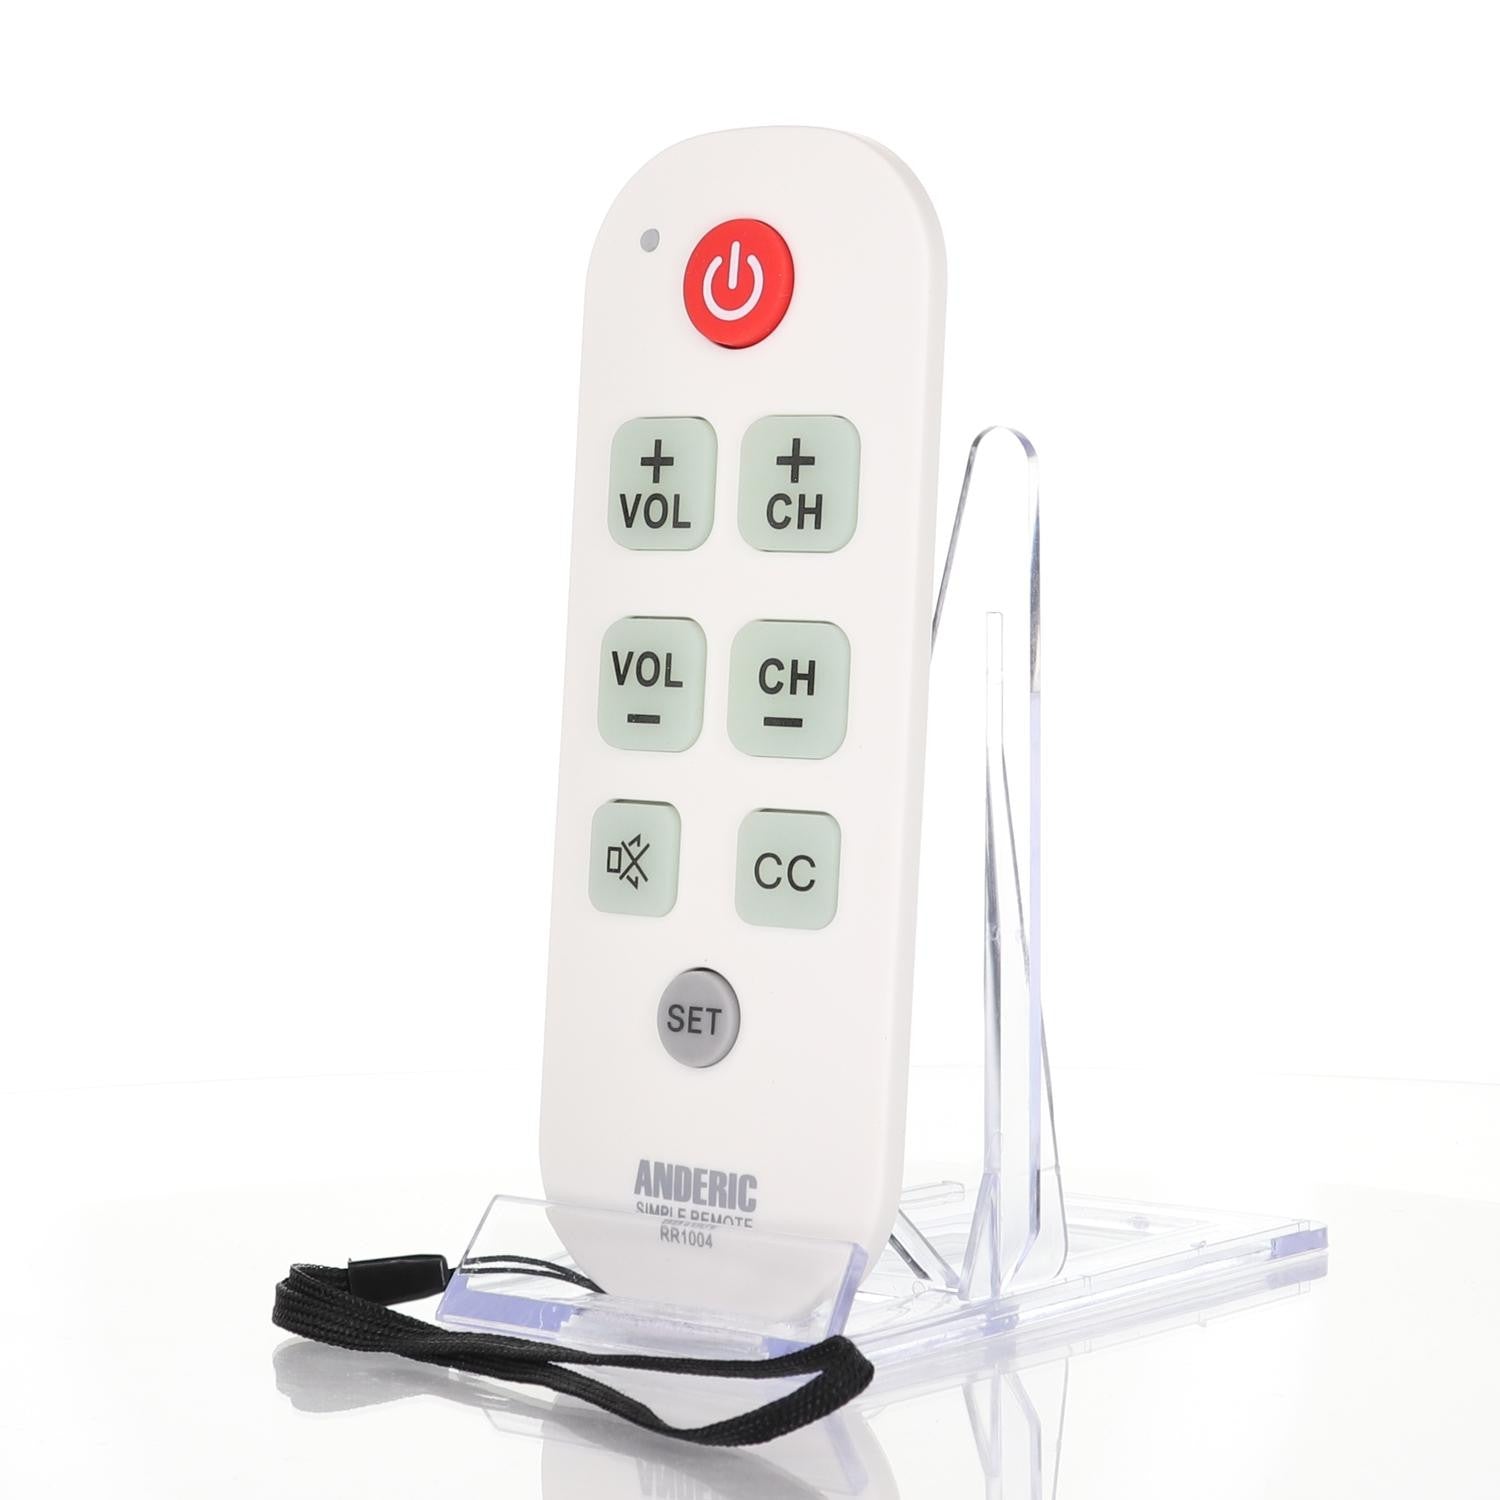 RR1004 Jumbo Button 1-Device Universal Remote Control for Senior TVs